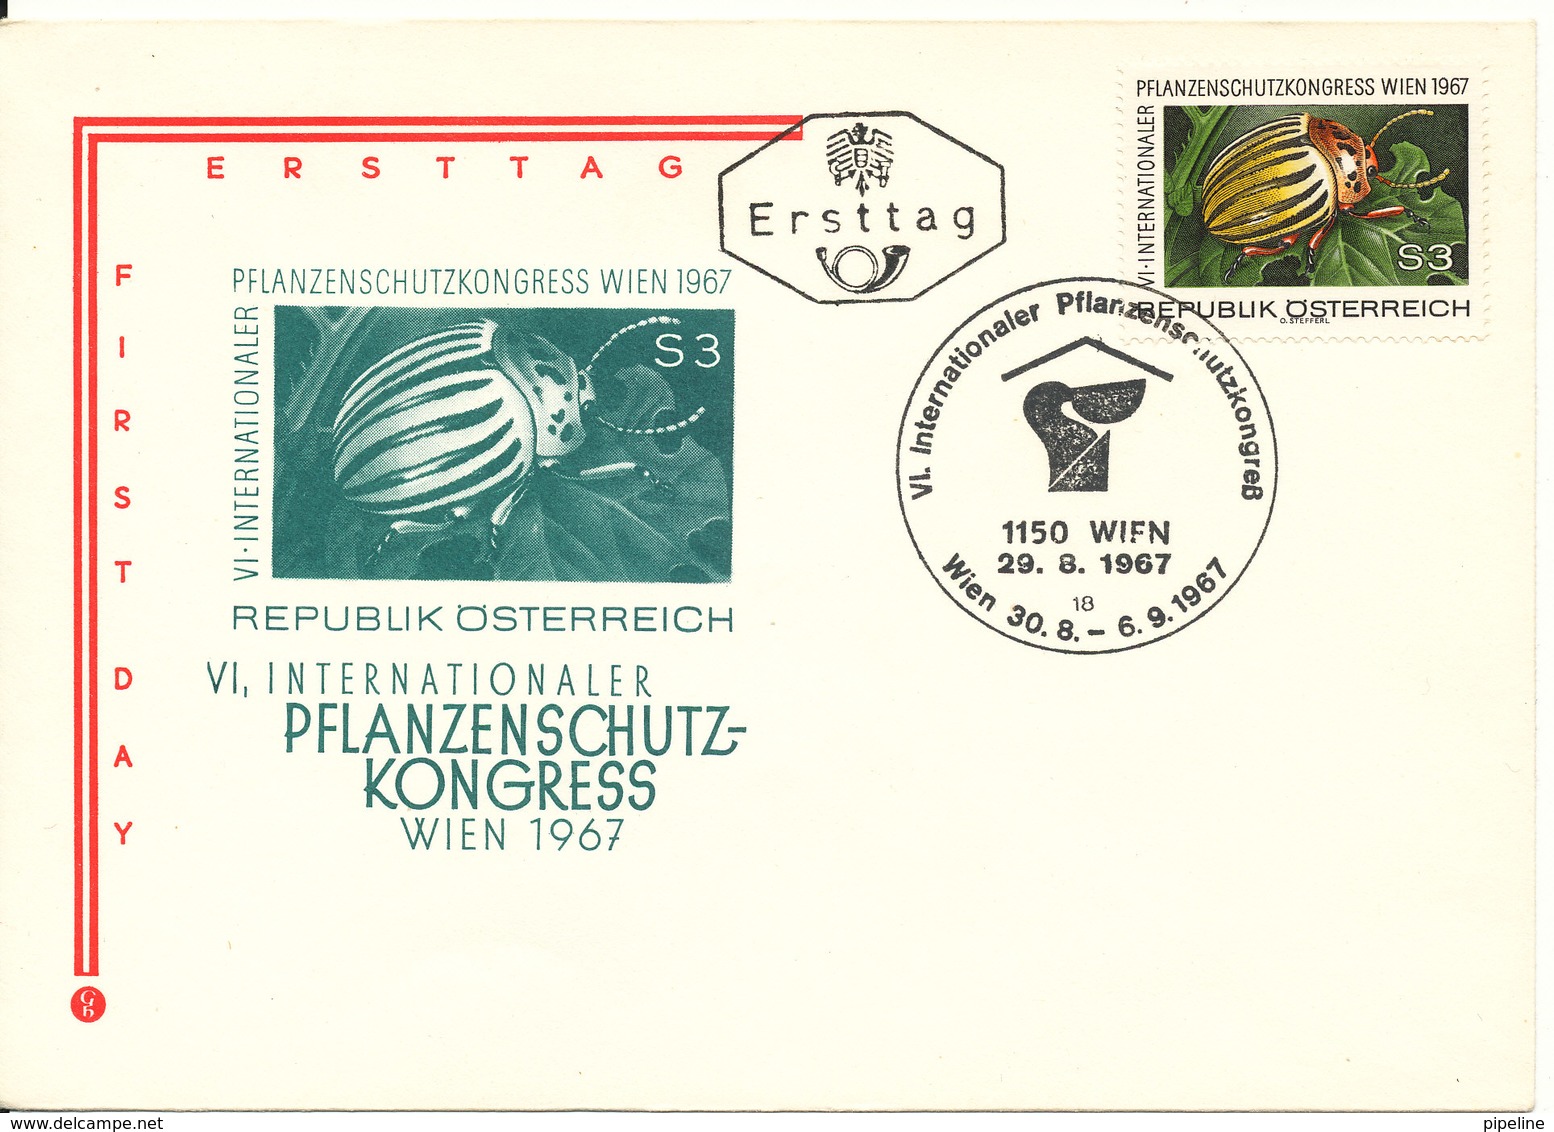 Austria FDC Planzenschutz - Kongress In Wien 29-8-1967 With Cachet - FDC